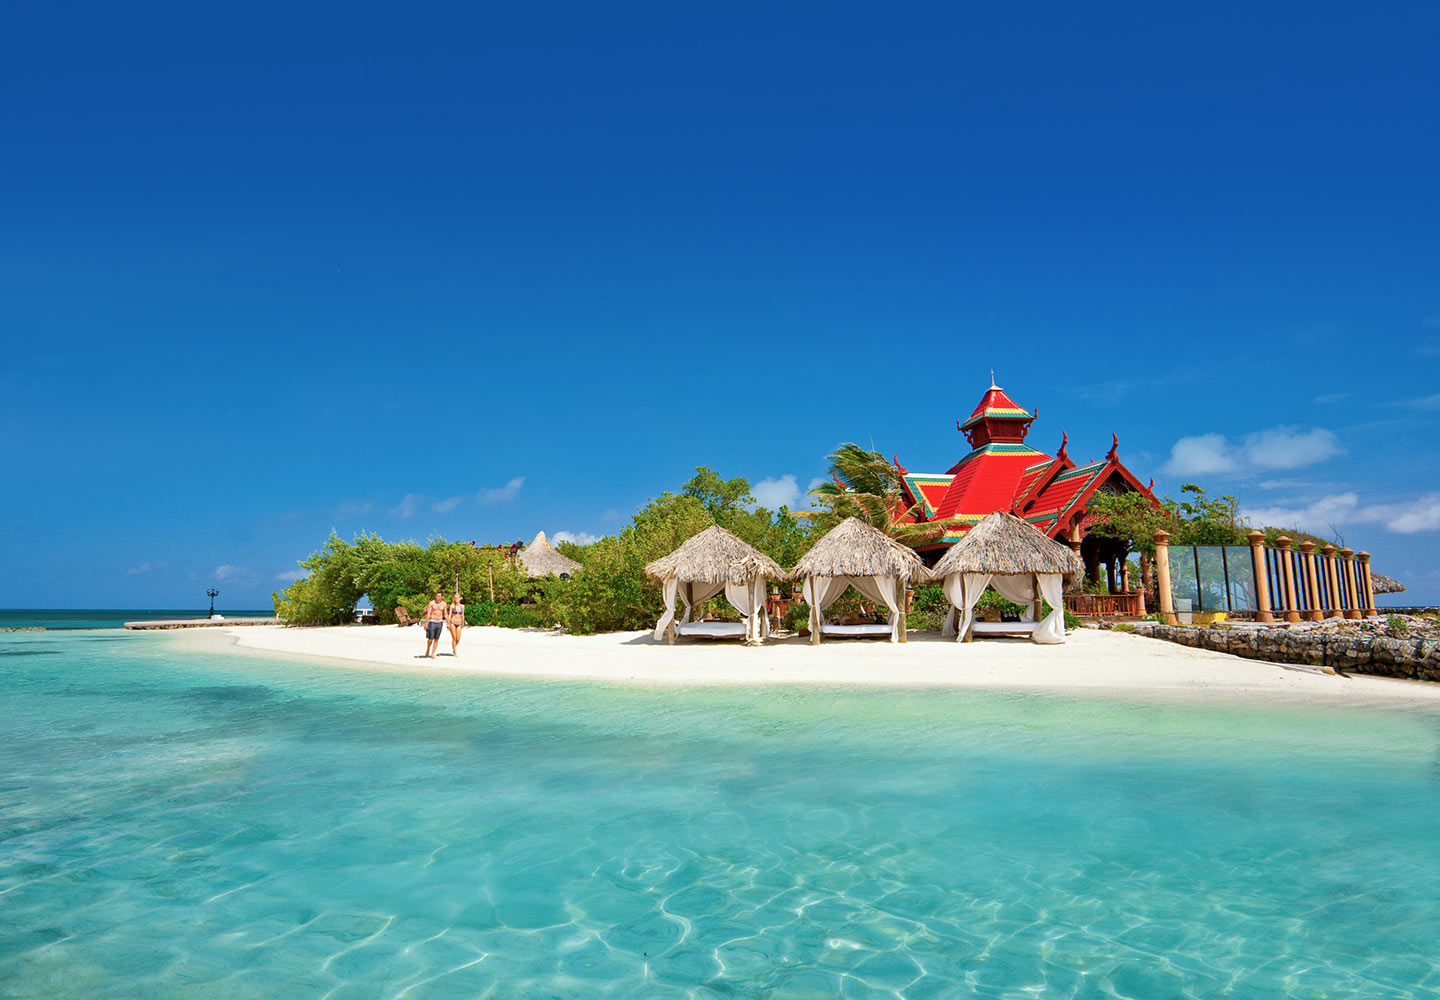 Sandals Royal Caribbean- Private Island